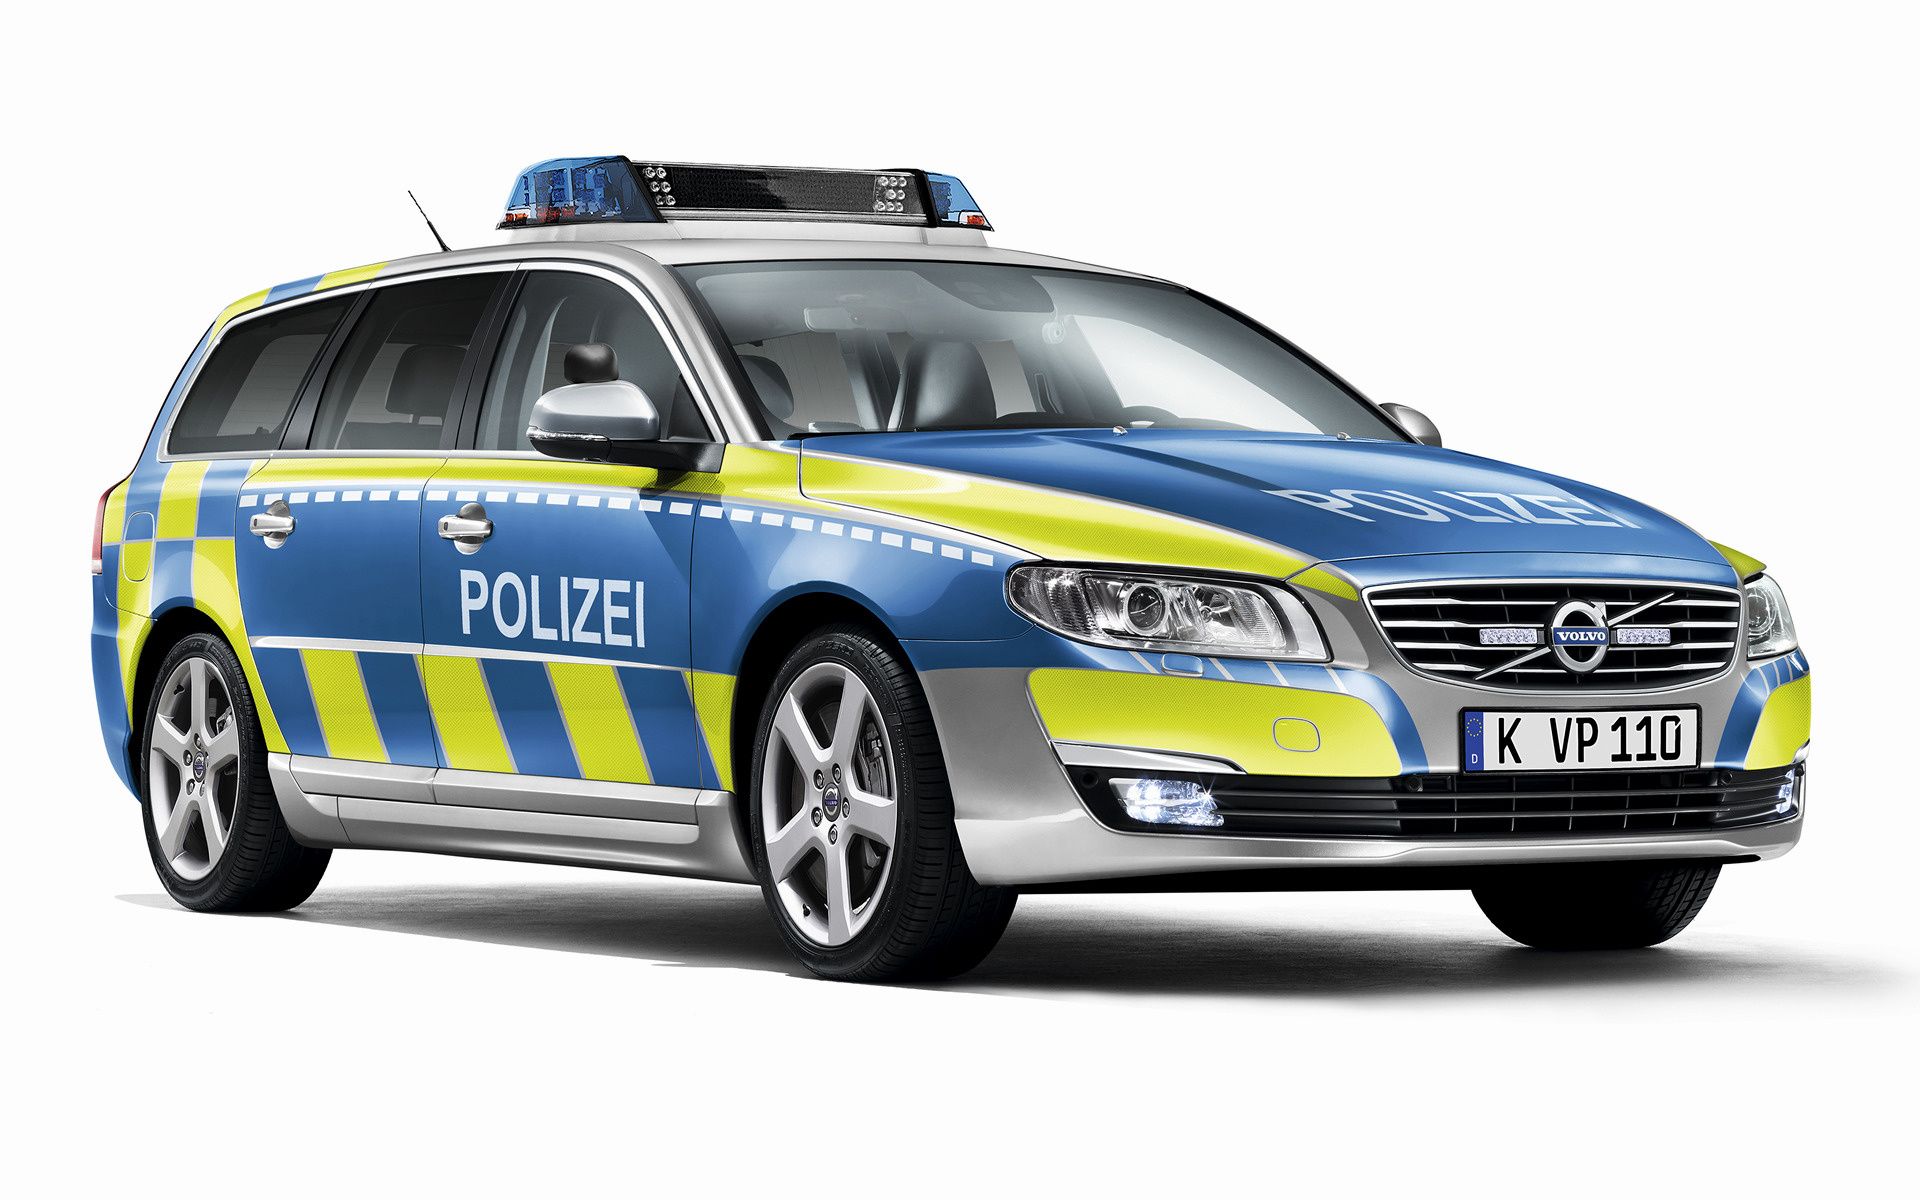 Volvo V70 Polizei and HD Image